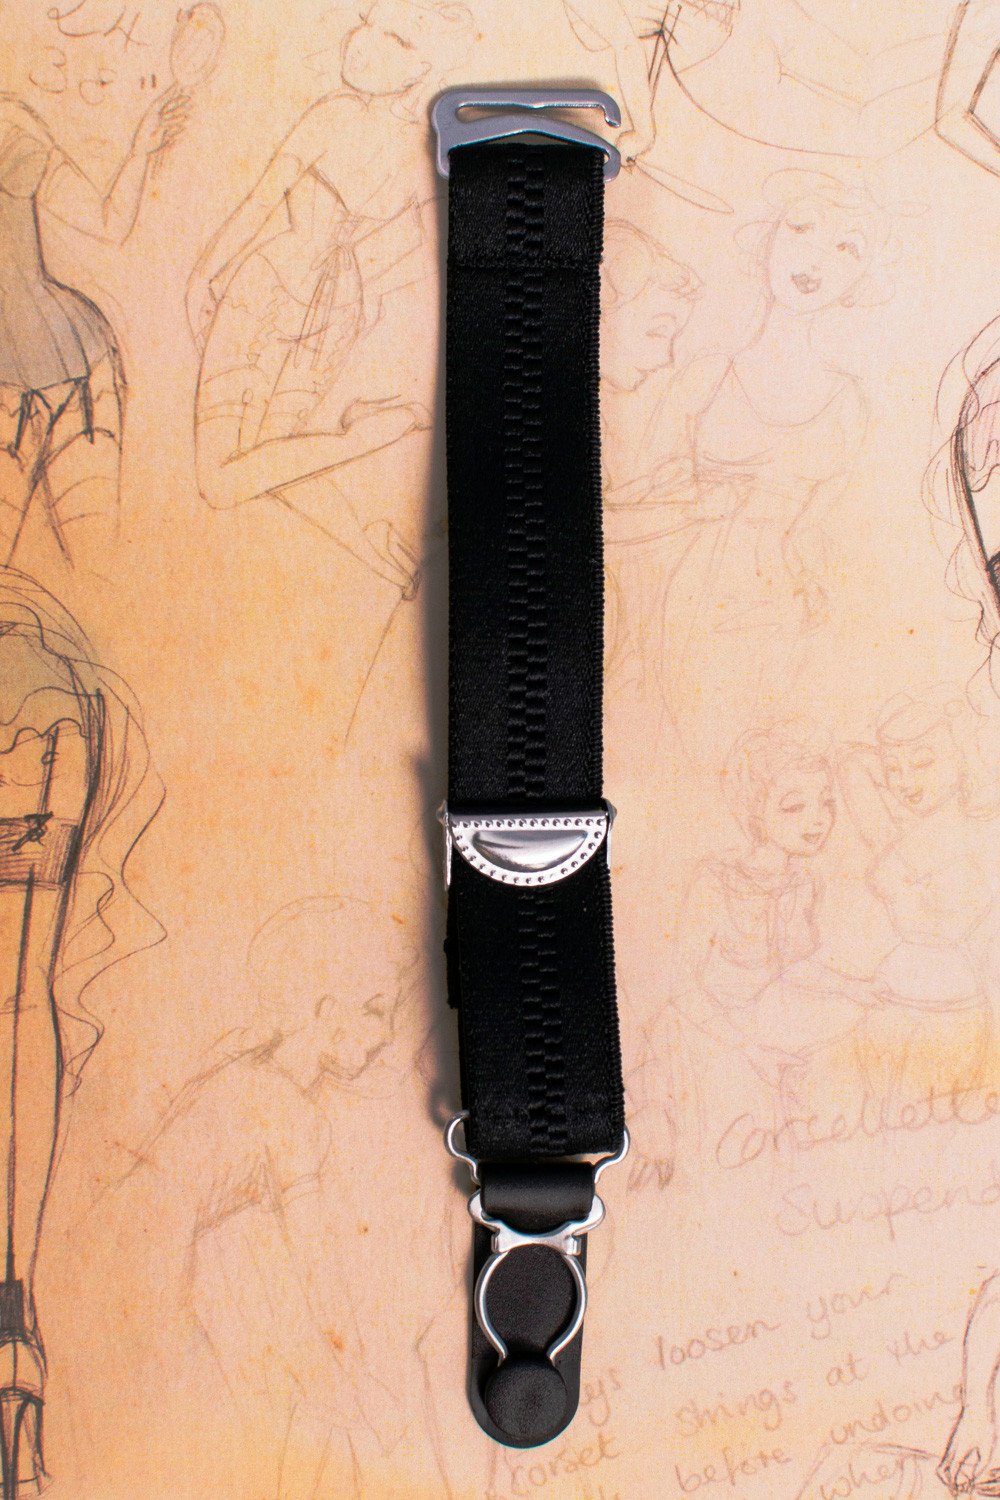 Four Detachable Suspender Clips - The Hosiery Box